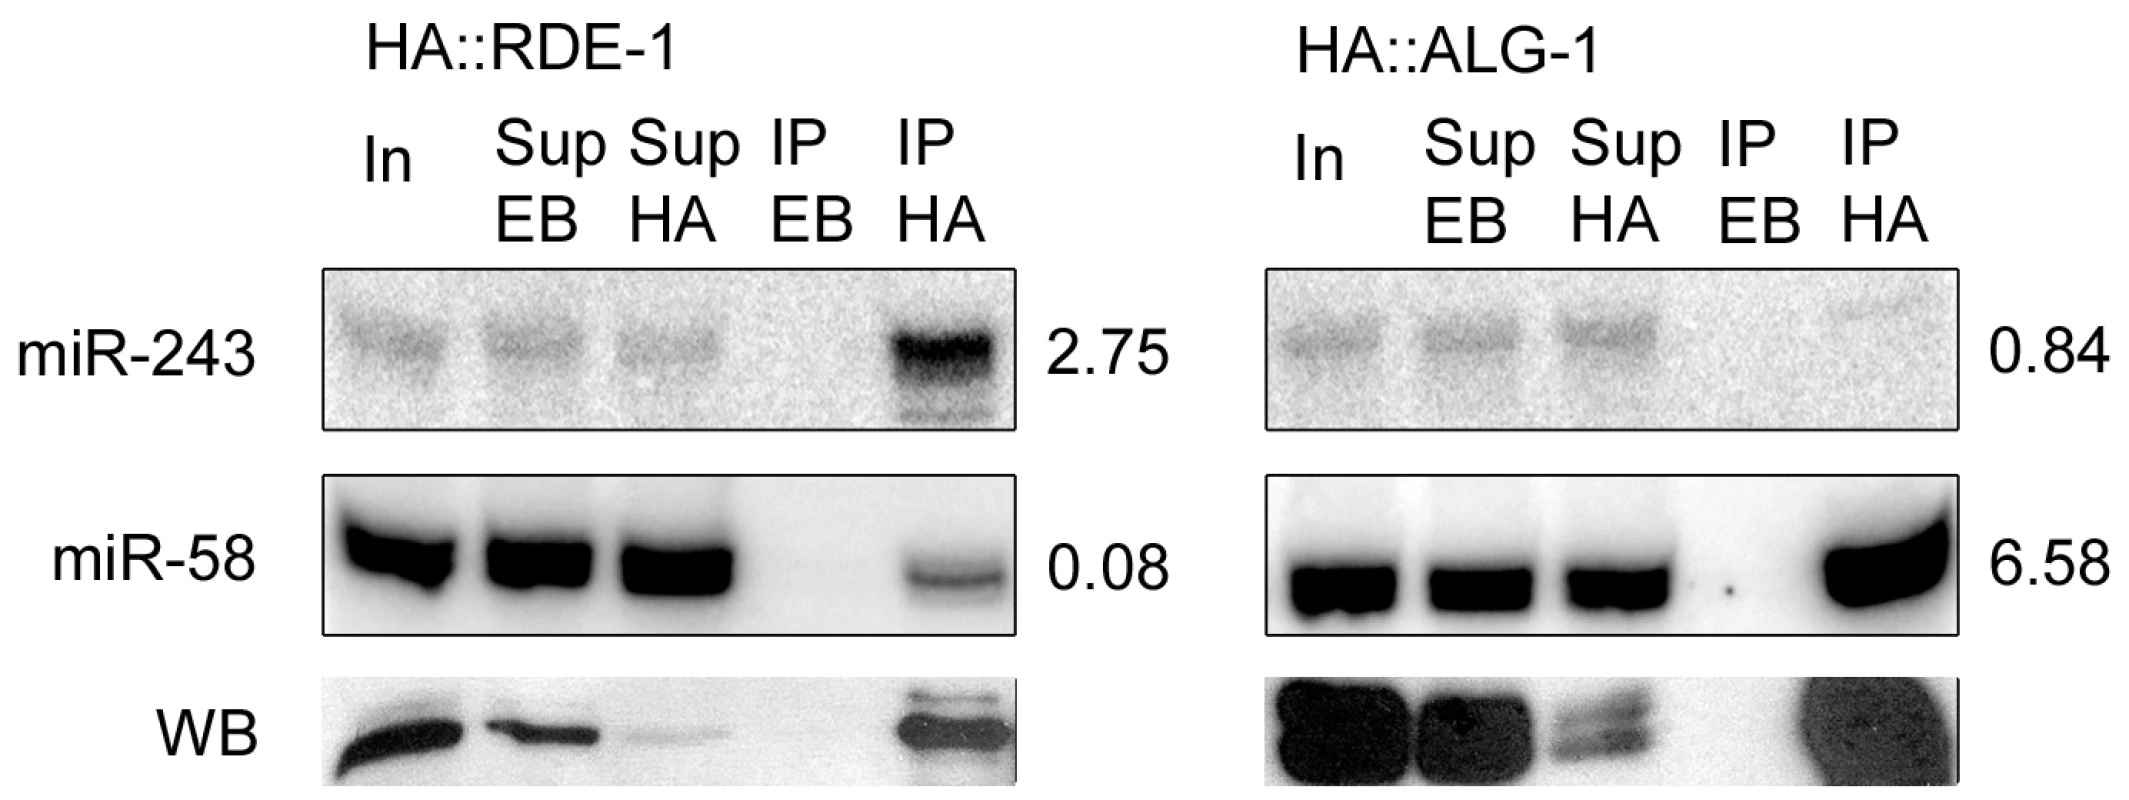 Mir-243 is enriched in HA::RDE-1 immunoprecipitates.